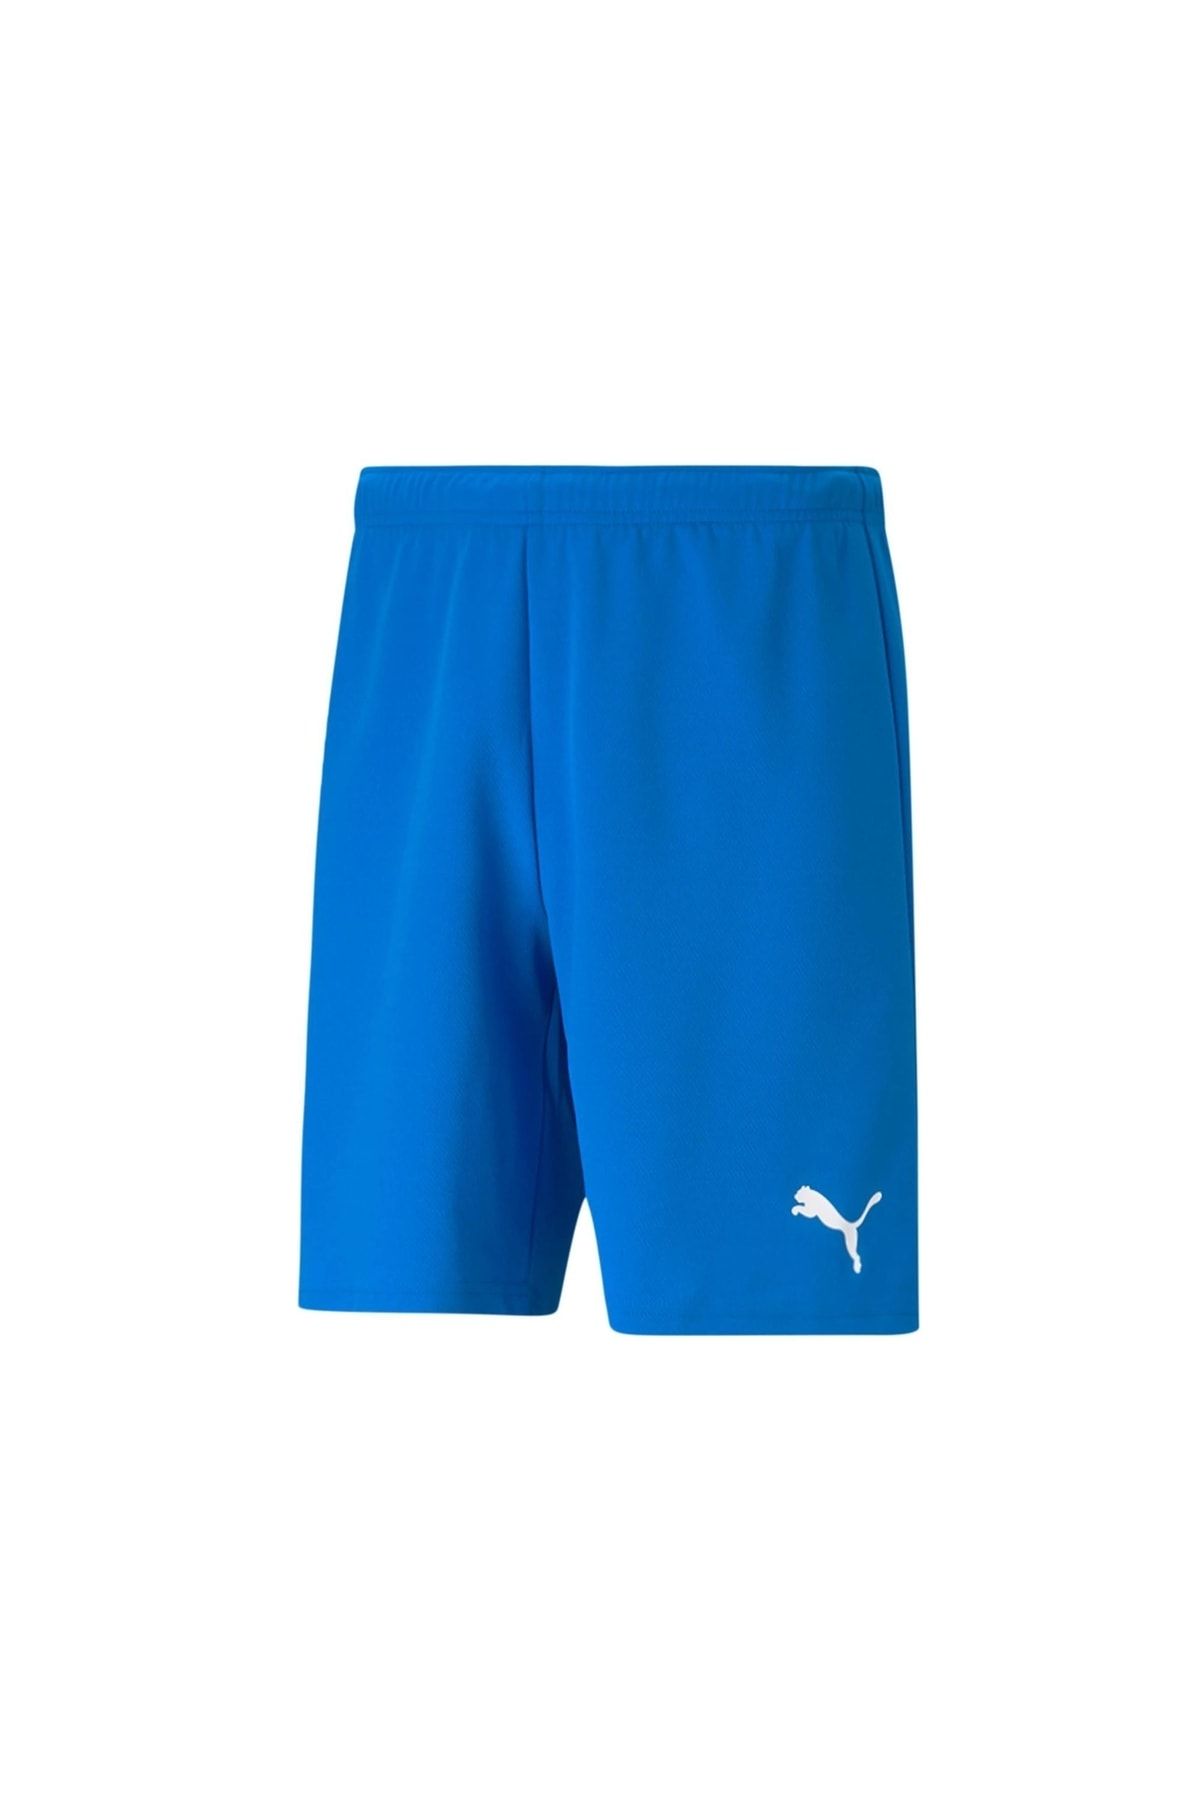 Puma Shorts - - Blue Trendyol Sports